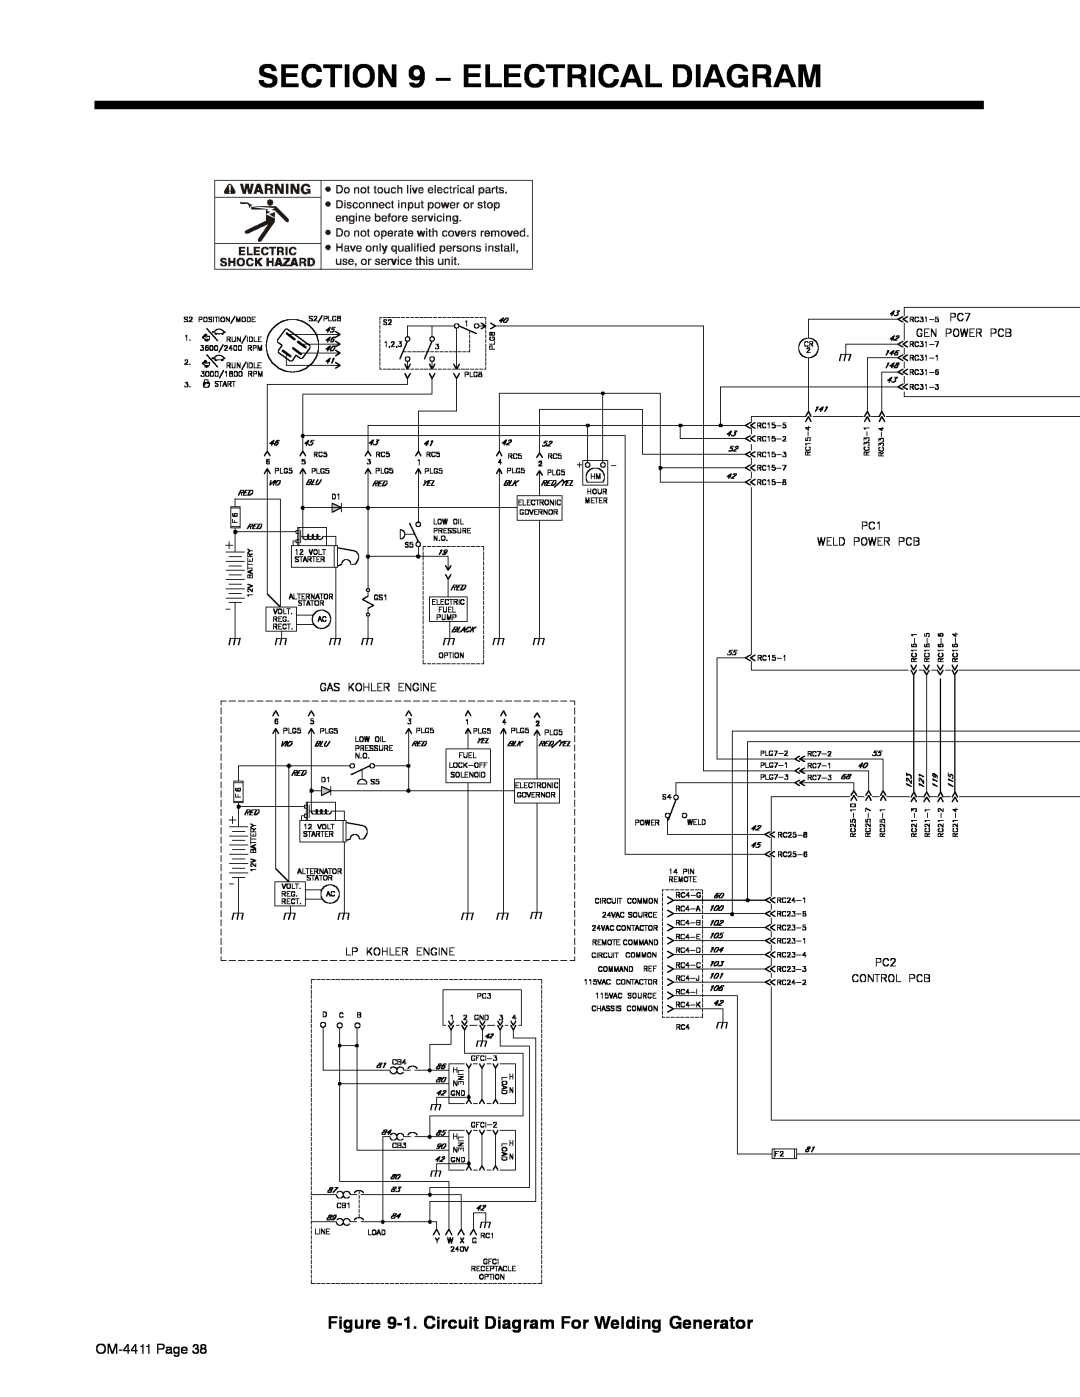 Miller Electric 301 G manual Electrical Diagram, 1. Circuit Diagram For Welding Generator 